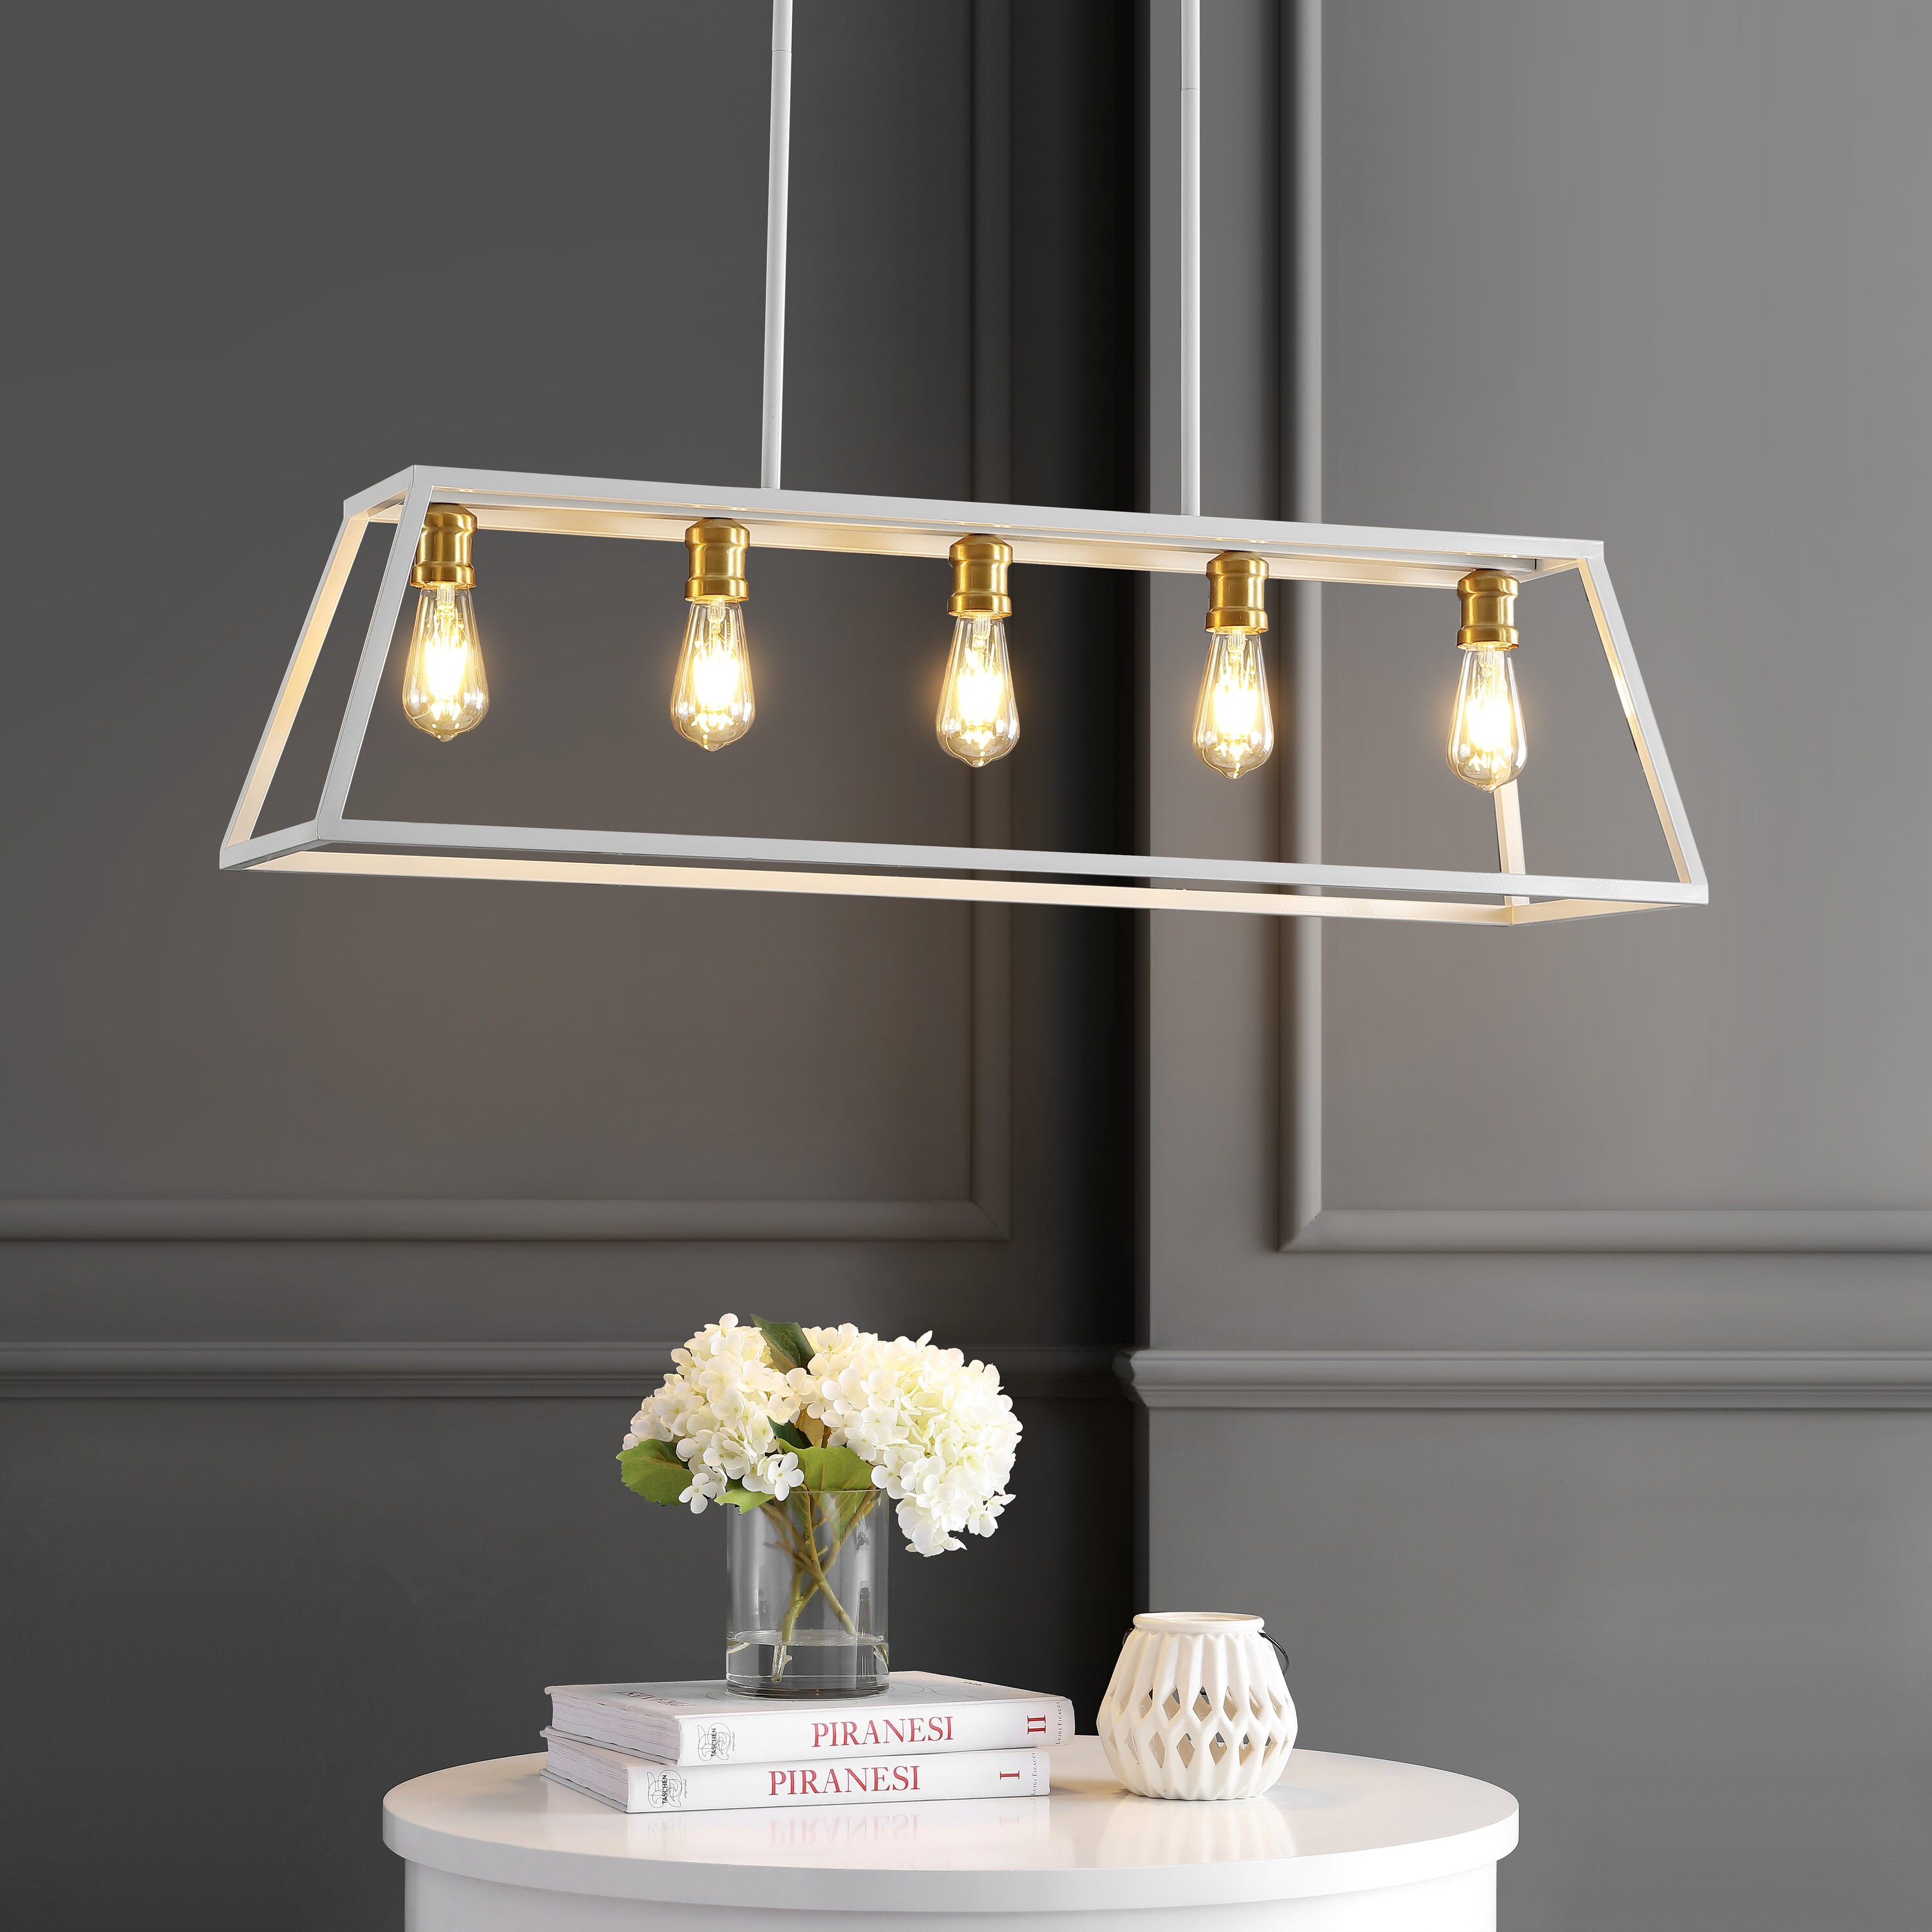 Pendant Lighting- Hanging Lights & Chandeliers - IKEA